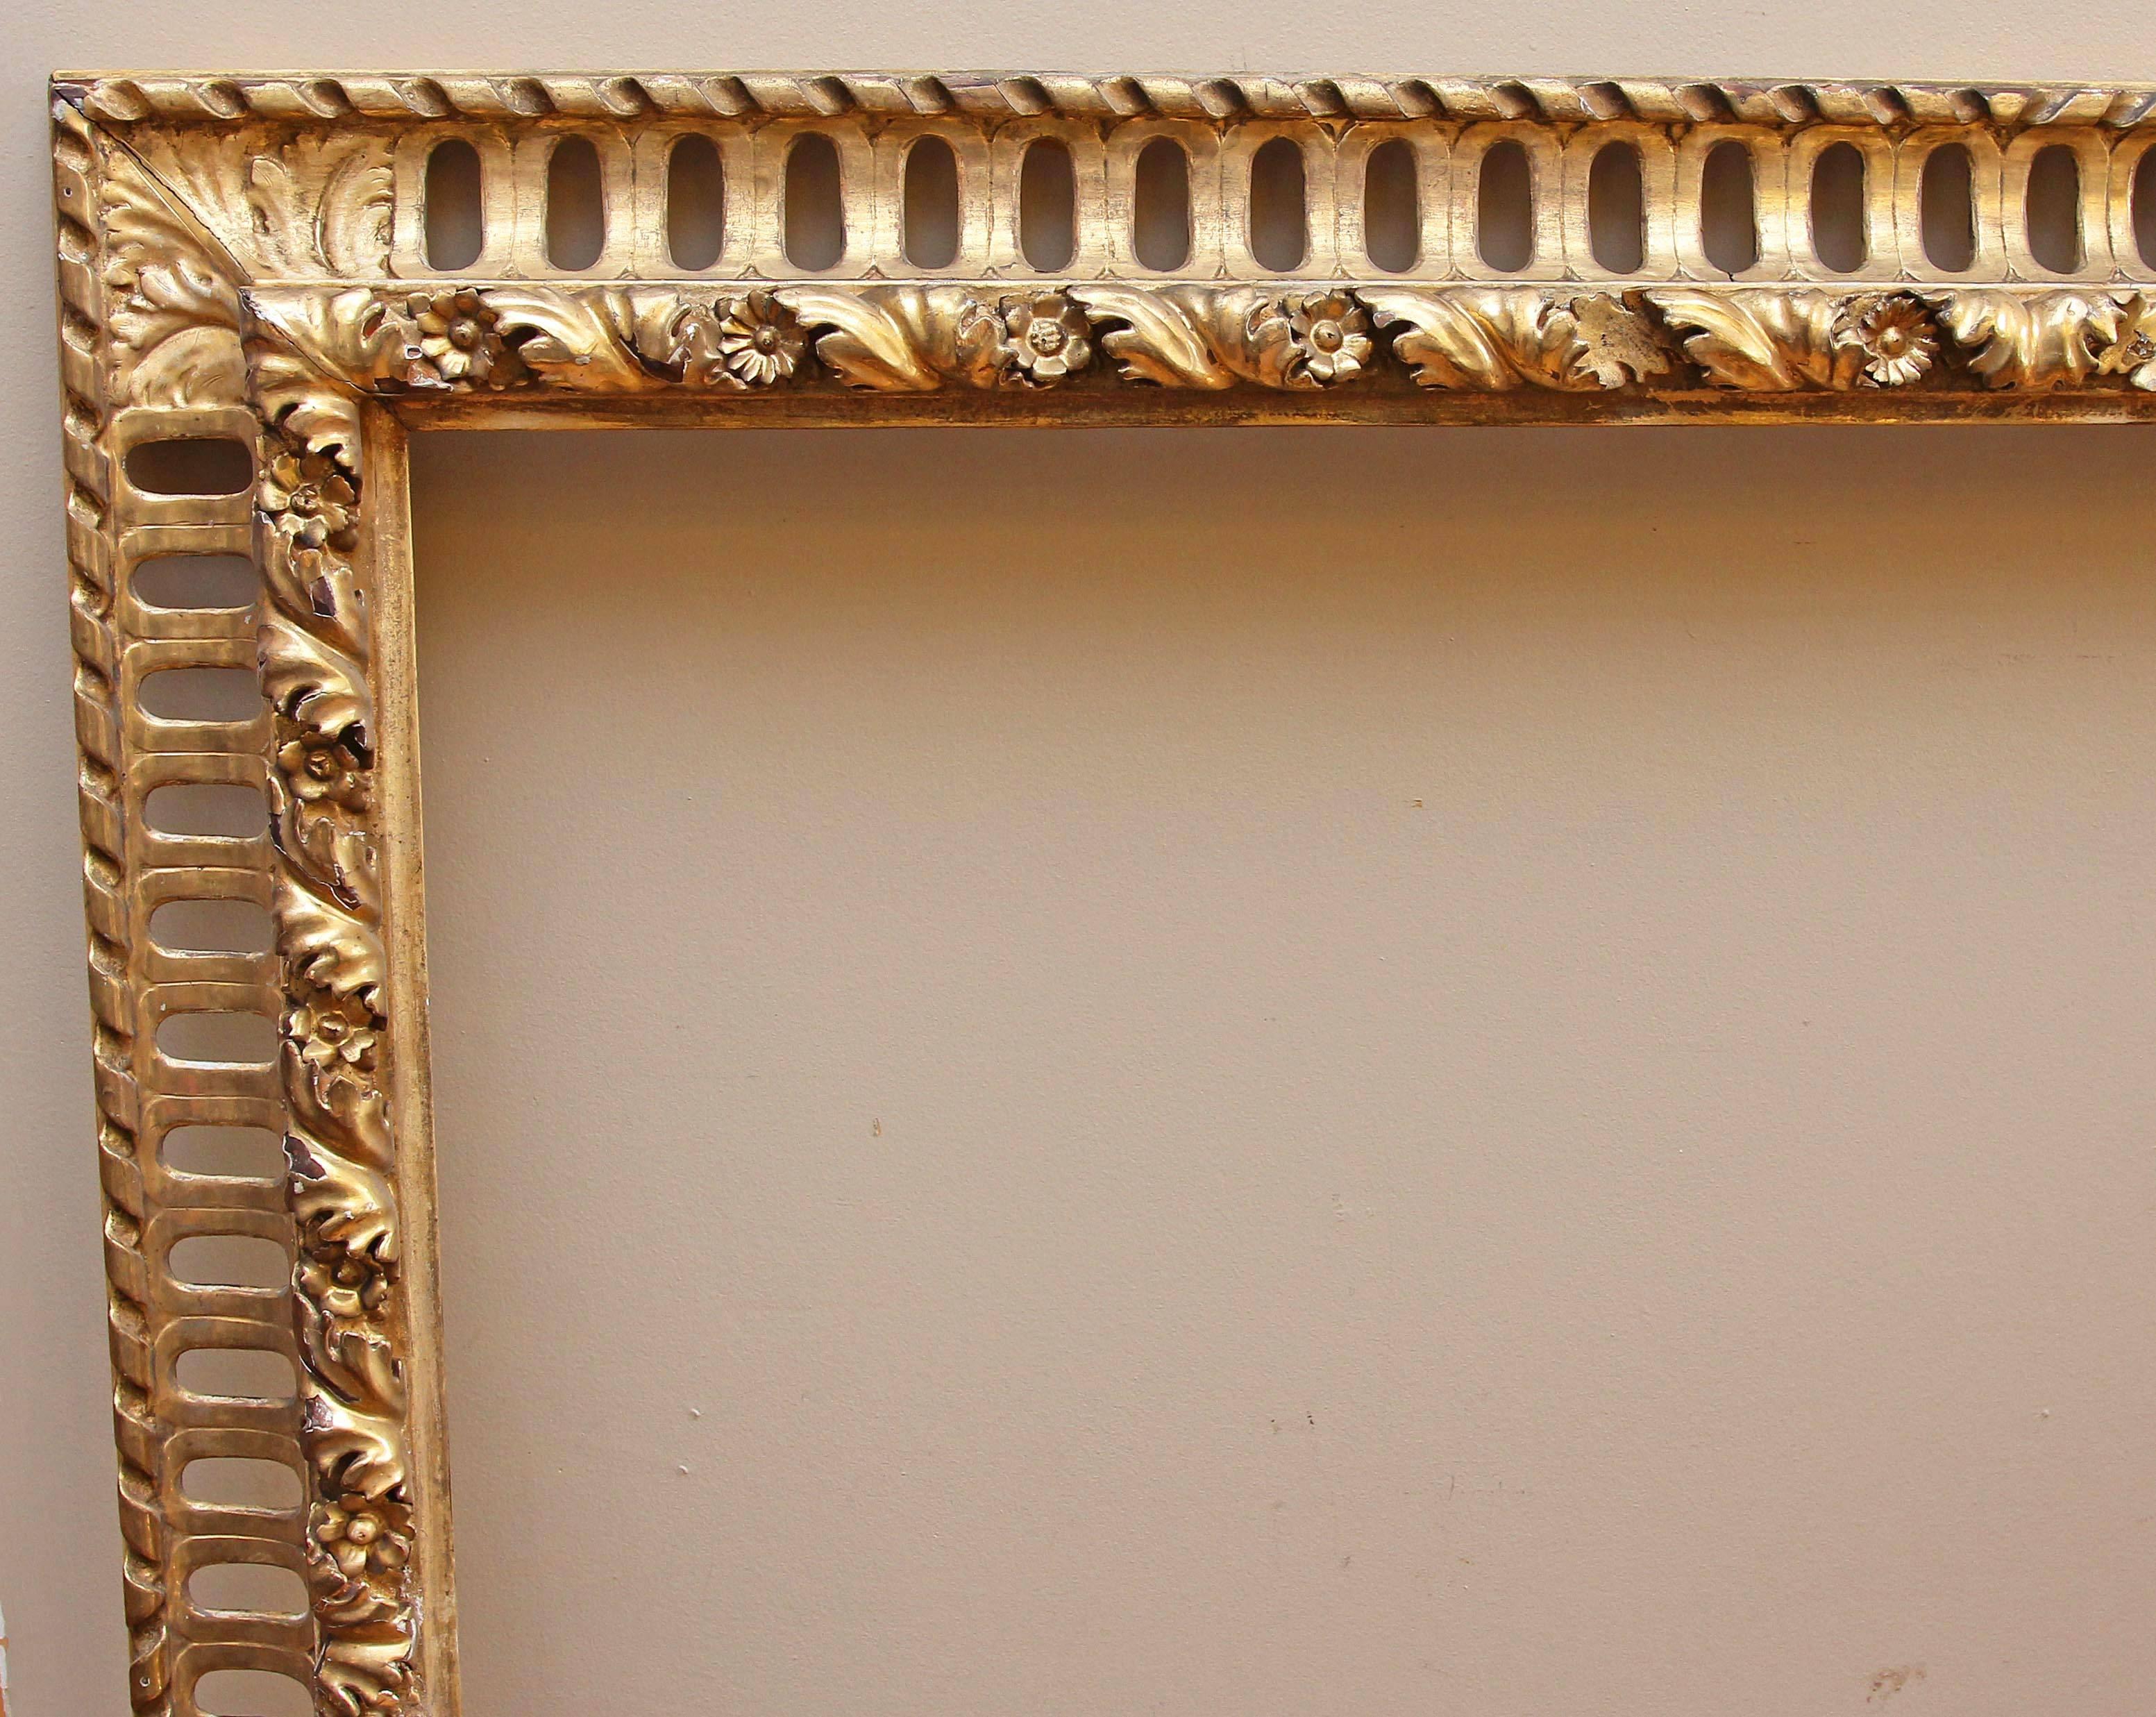 19th century frames